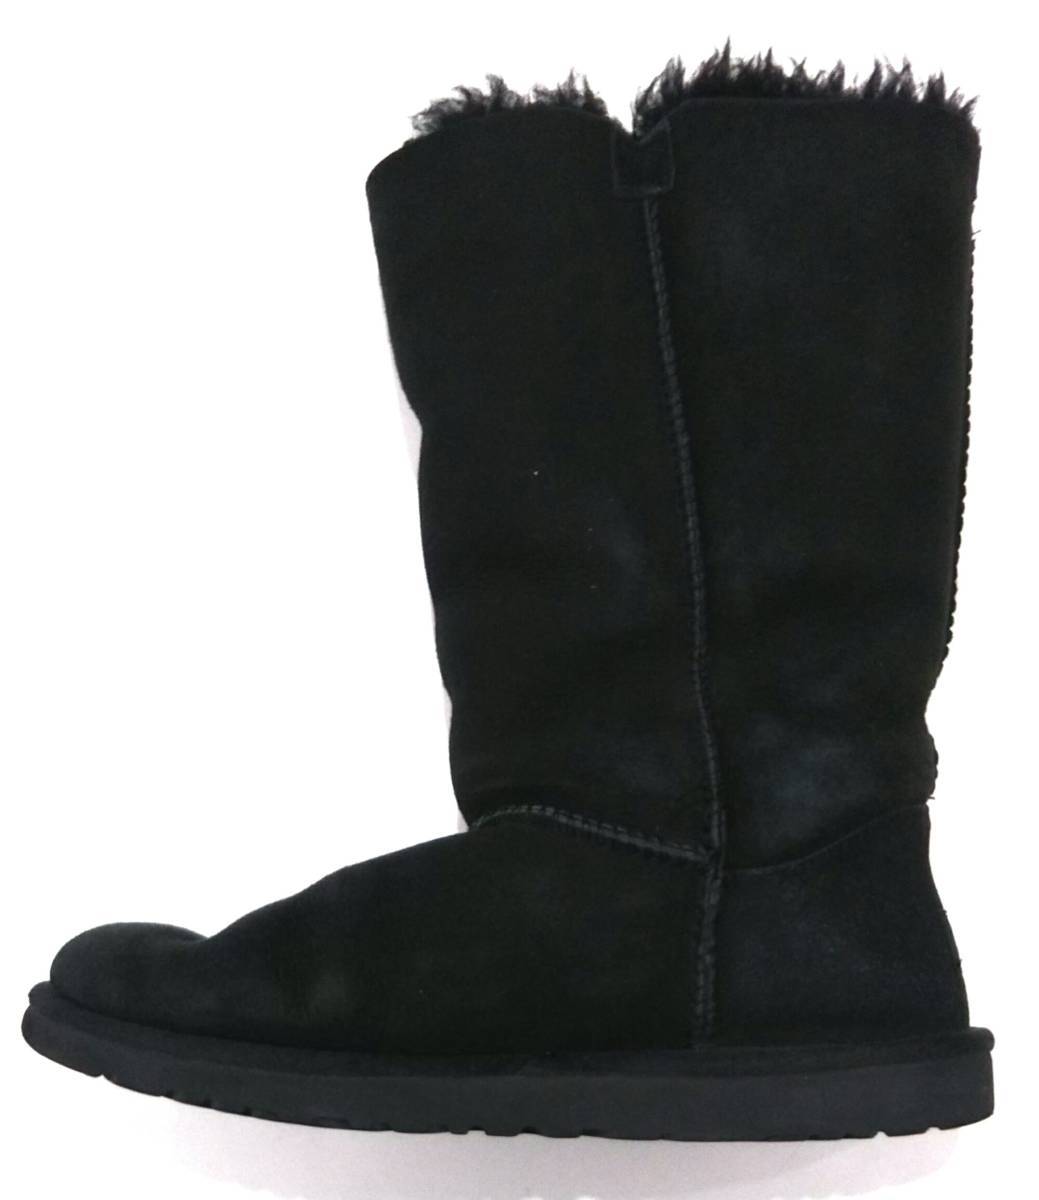 UGG australia UGG Australia mouton boots long boots 24cm UK5 lady's black black shoes shoes boots 